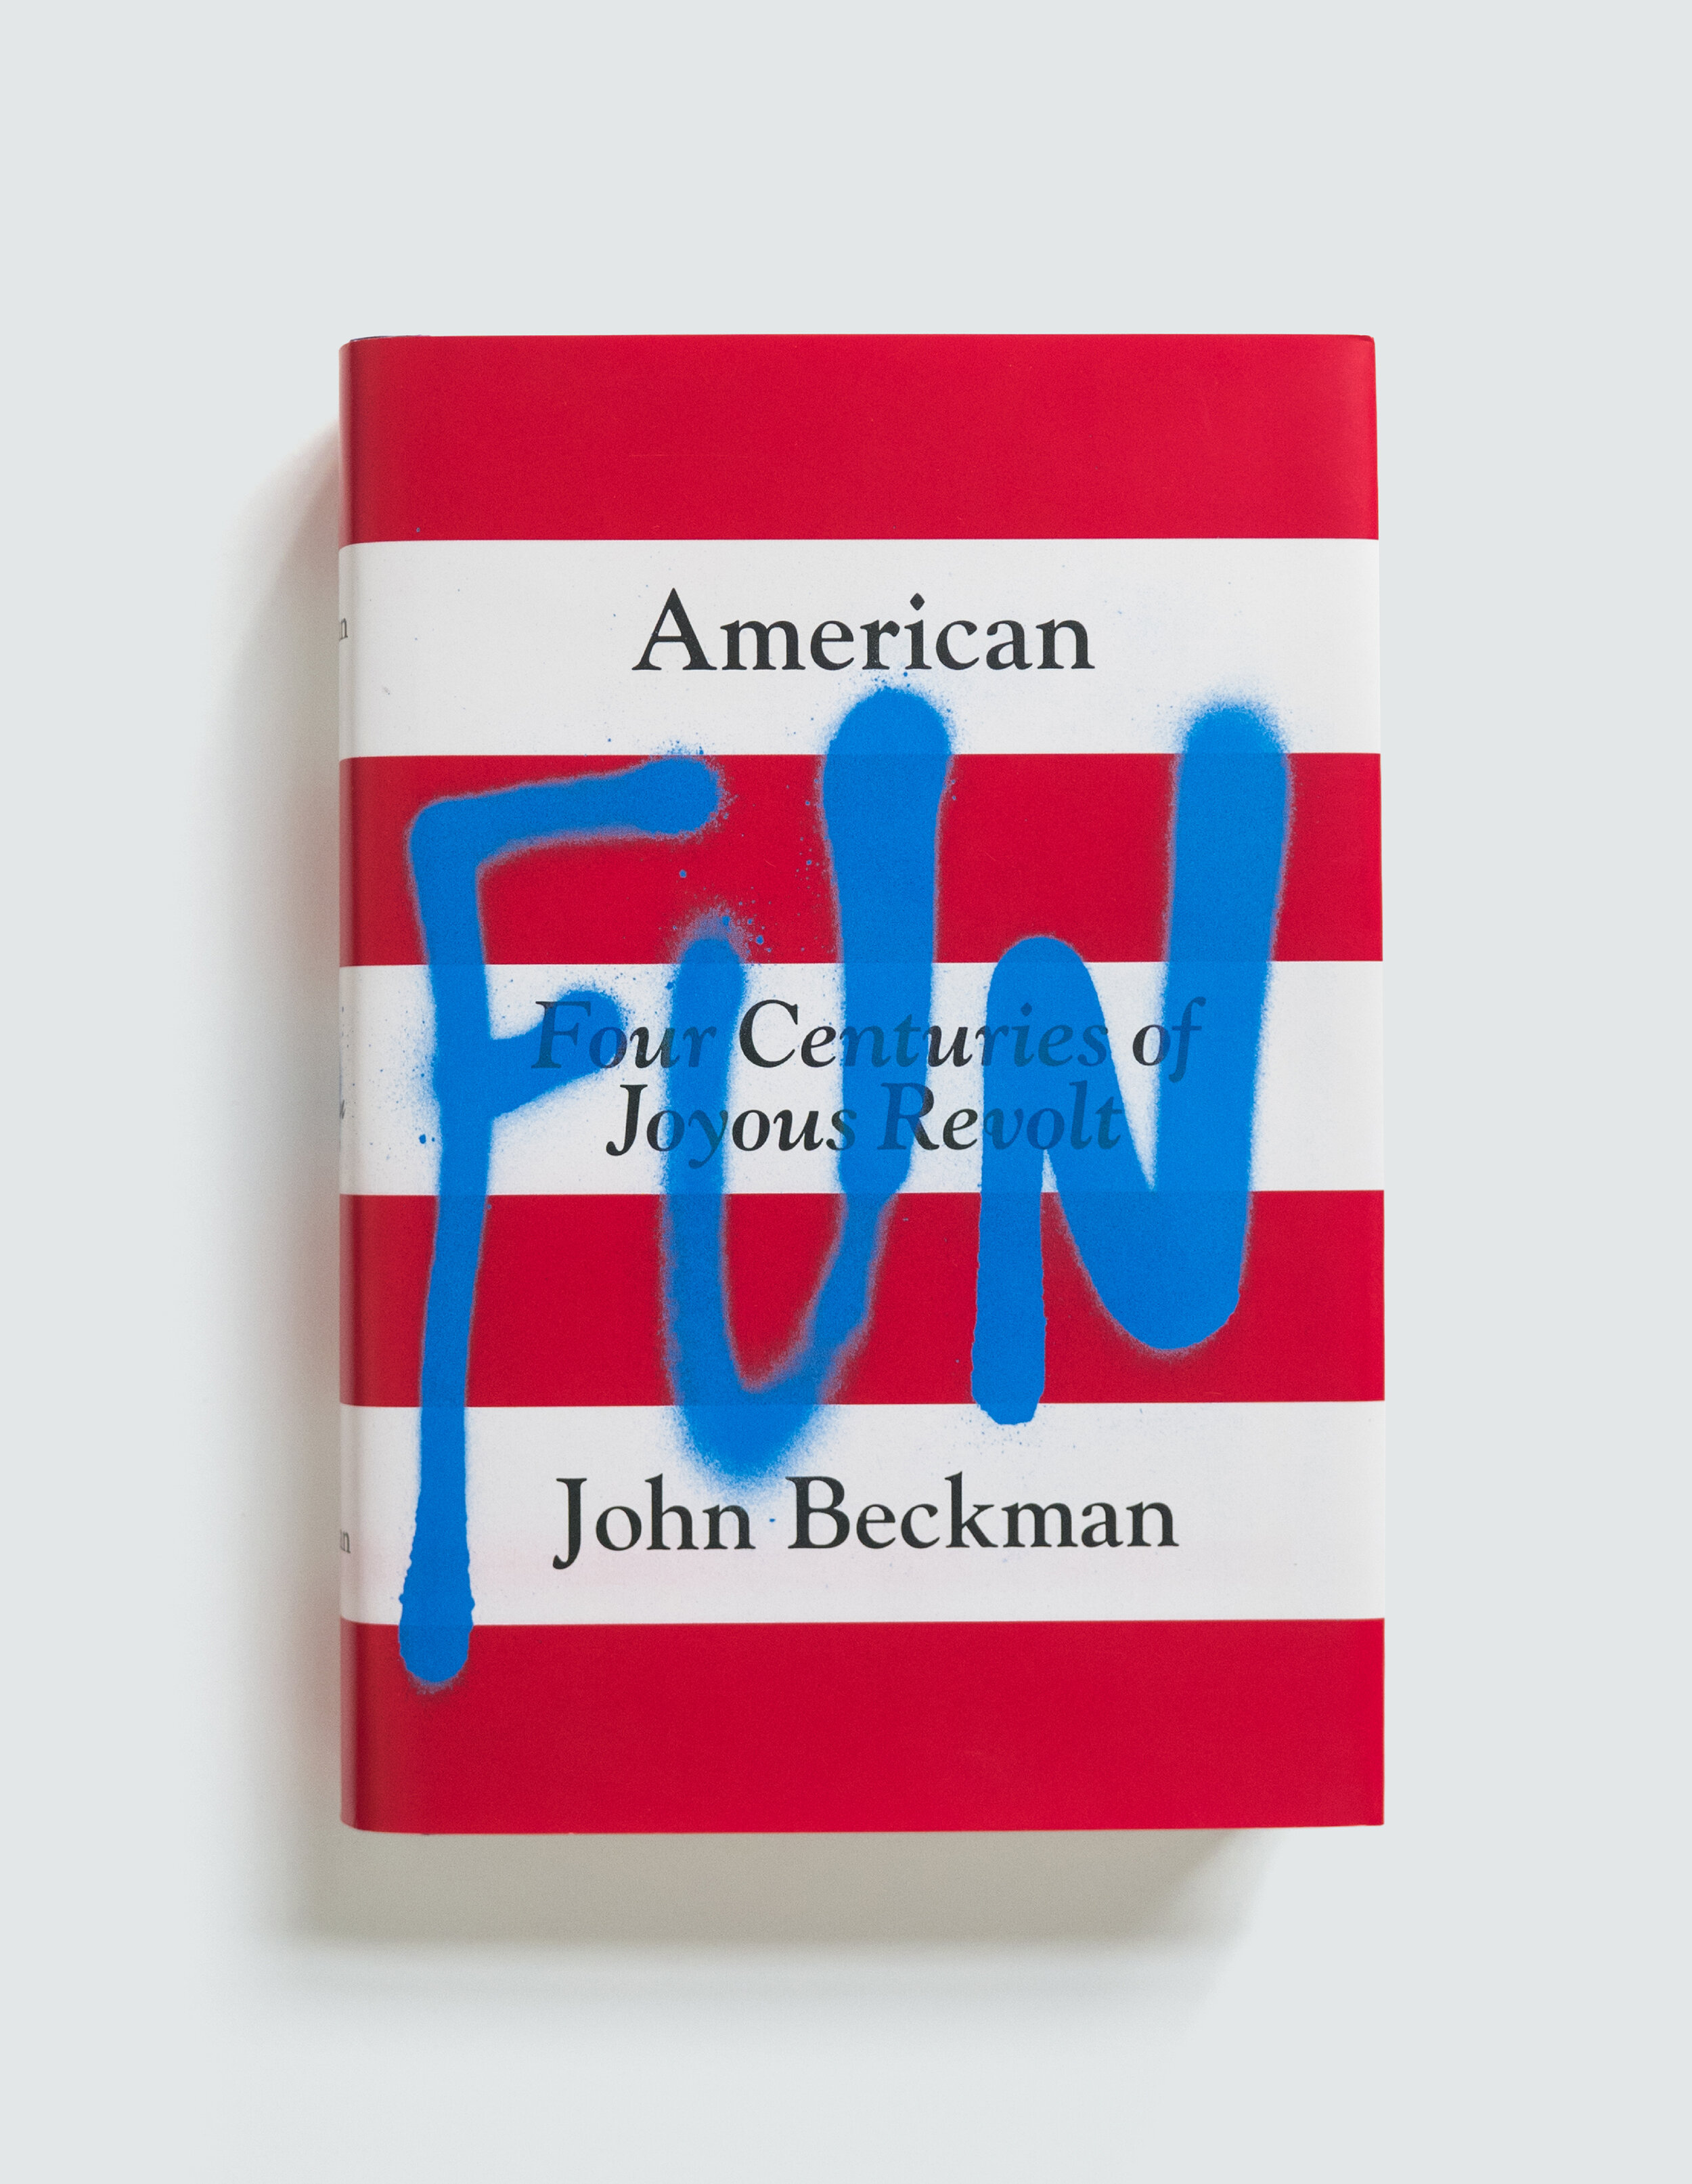 JOHN BECKMAN. PANTHEON BOOKS, 2013.